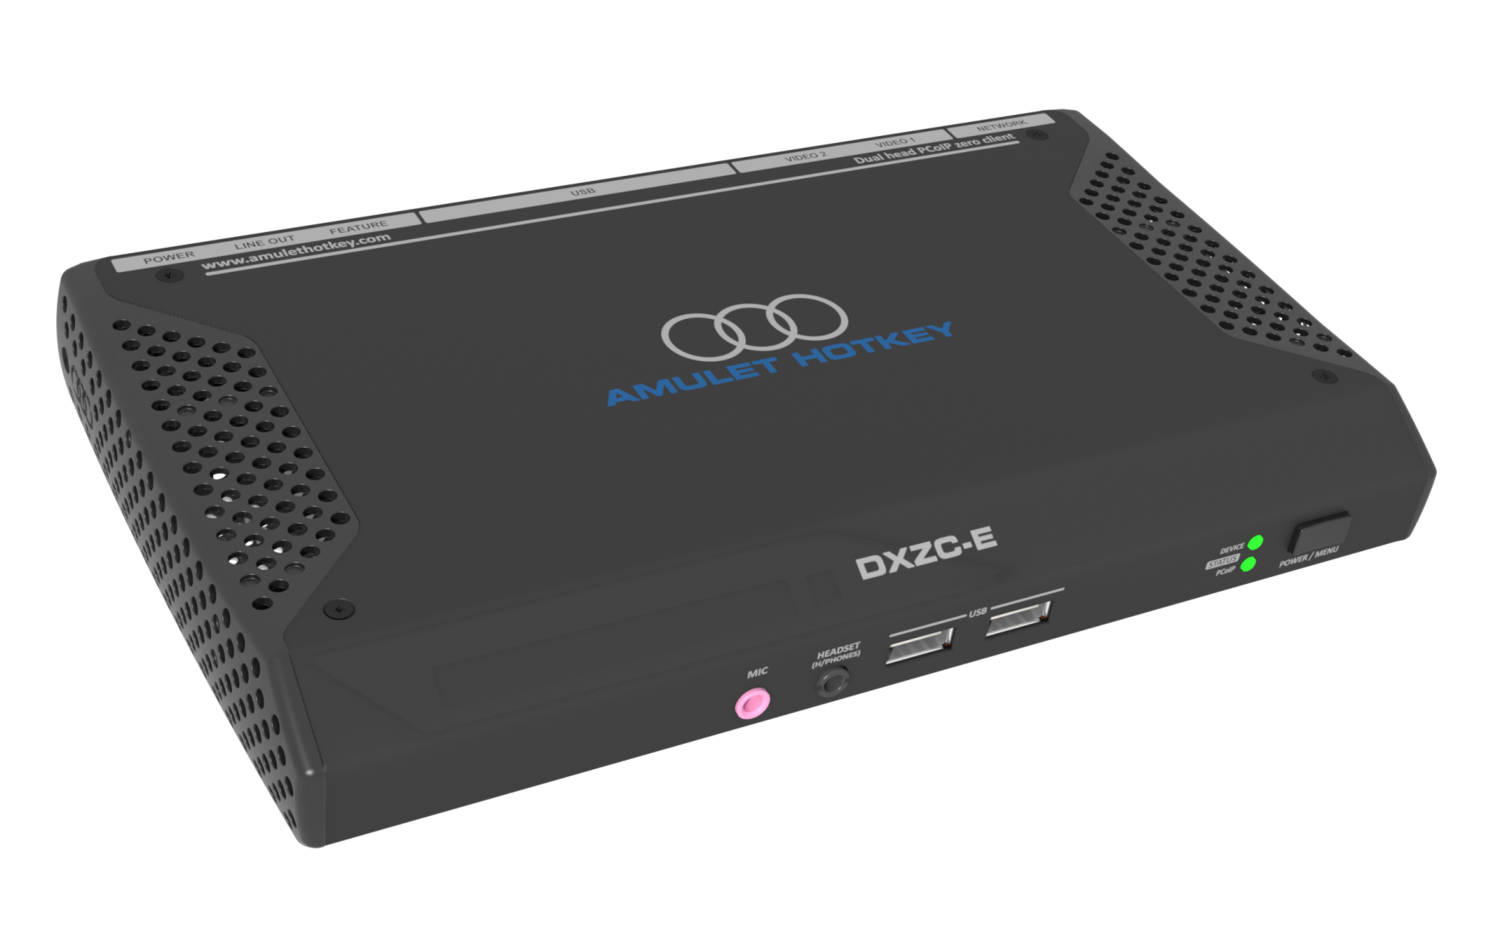 DXZC-EC Zero Client (card reader)